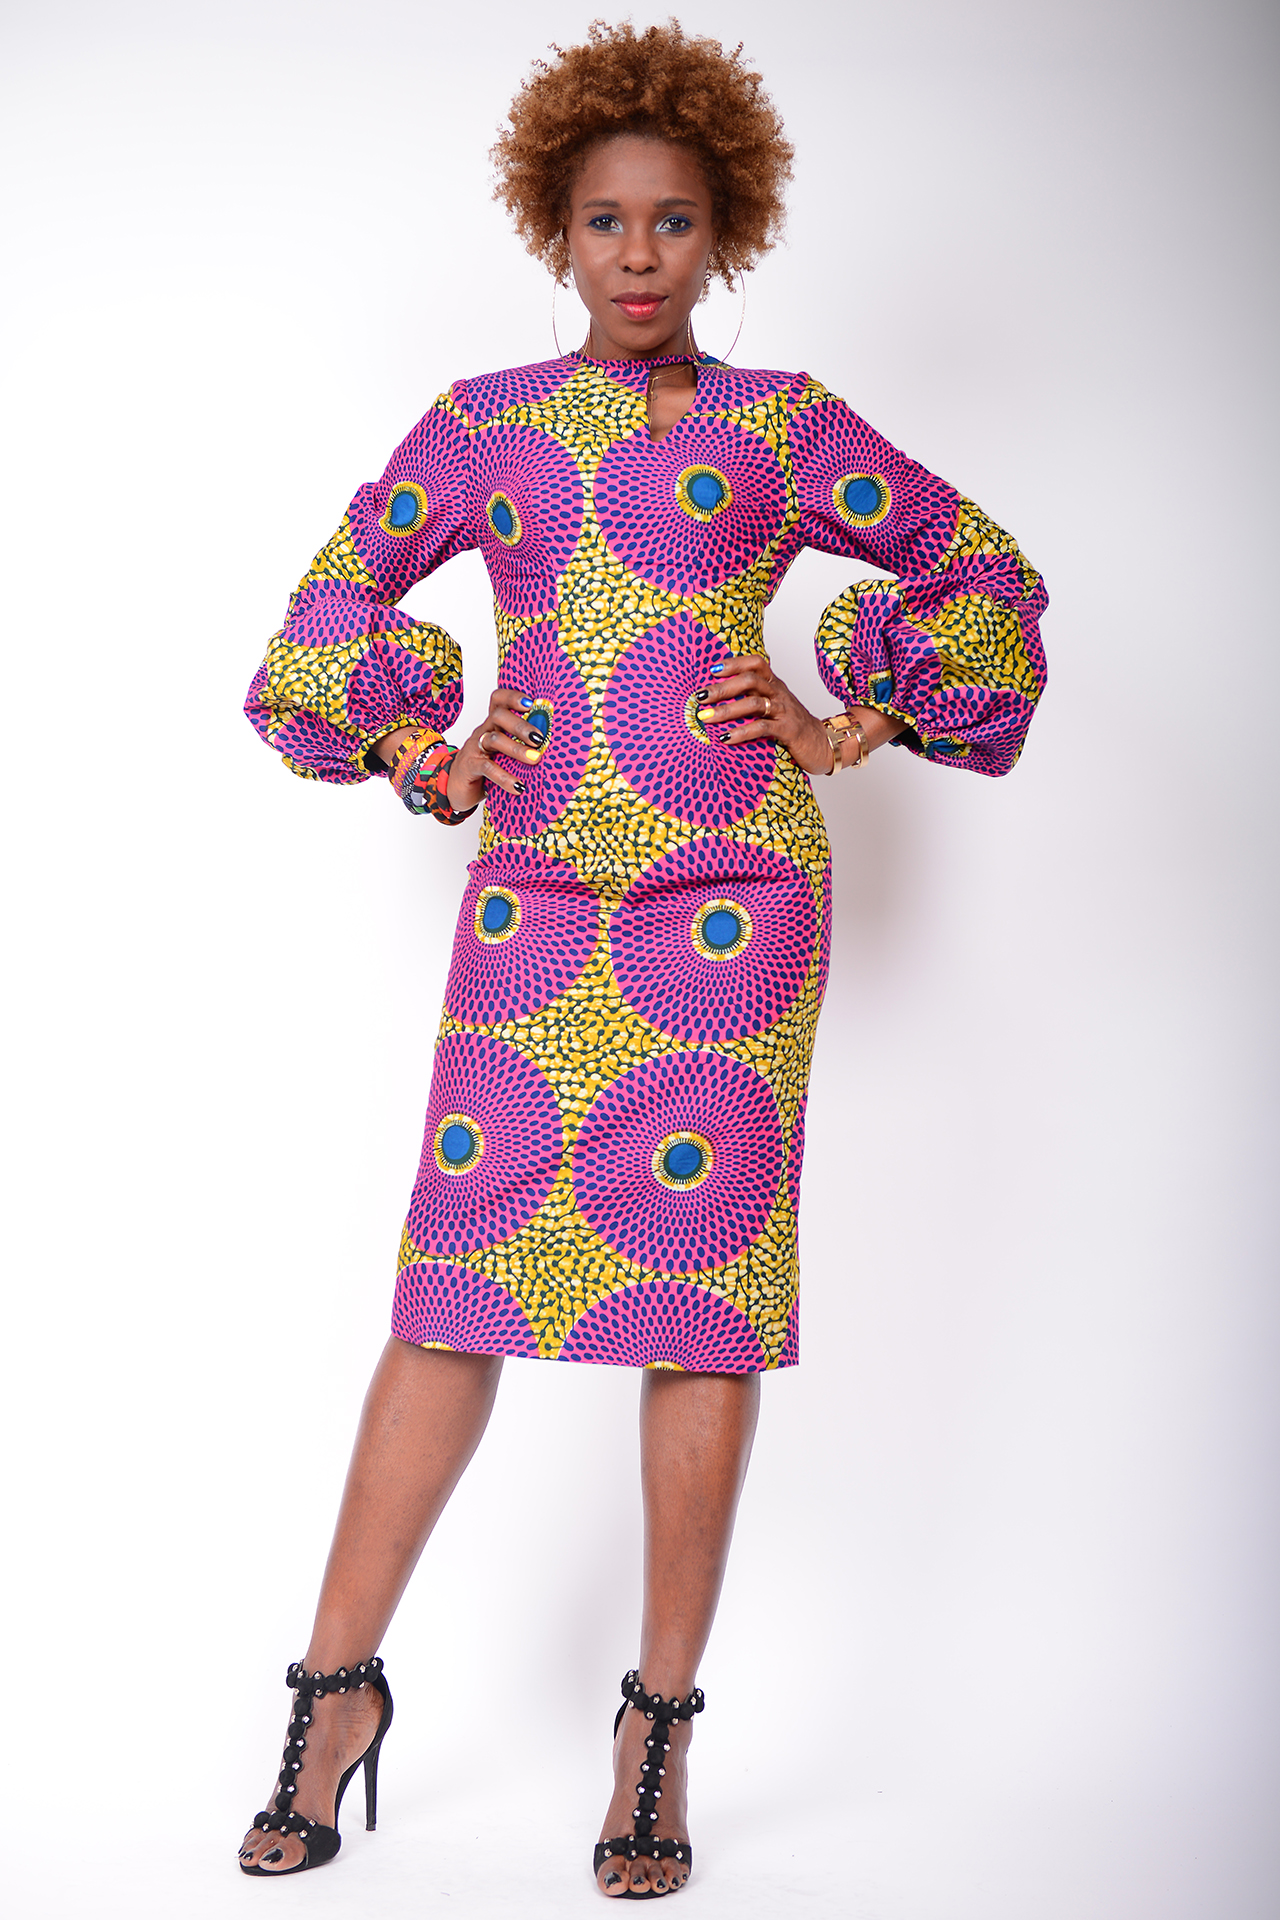  Afrikanische Mode - Herbst 2019